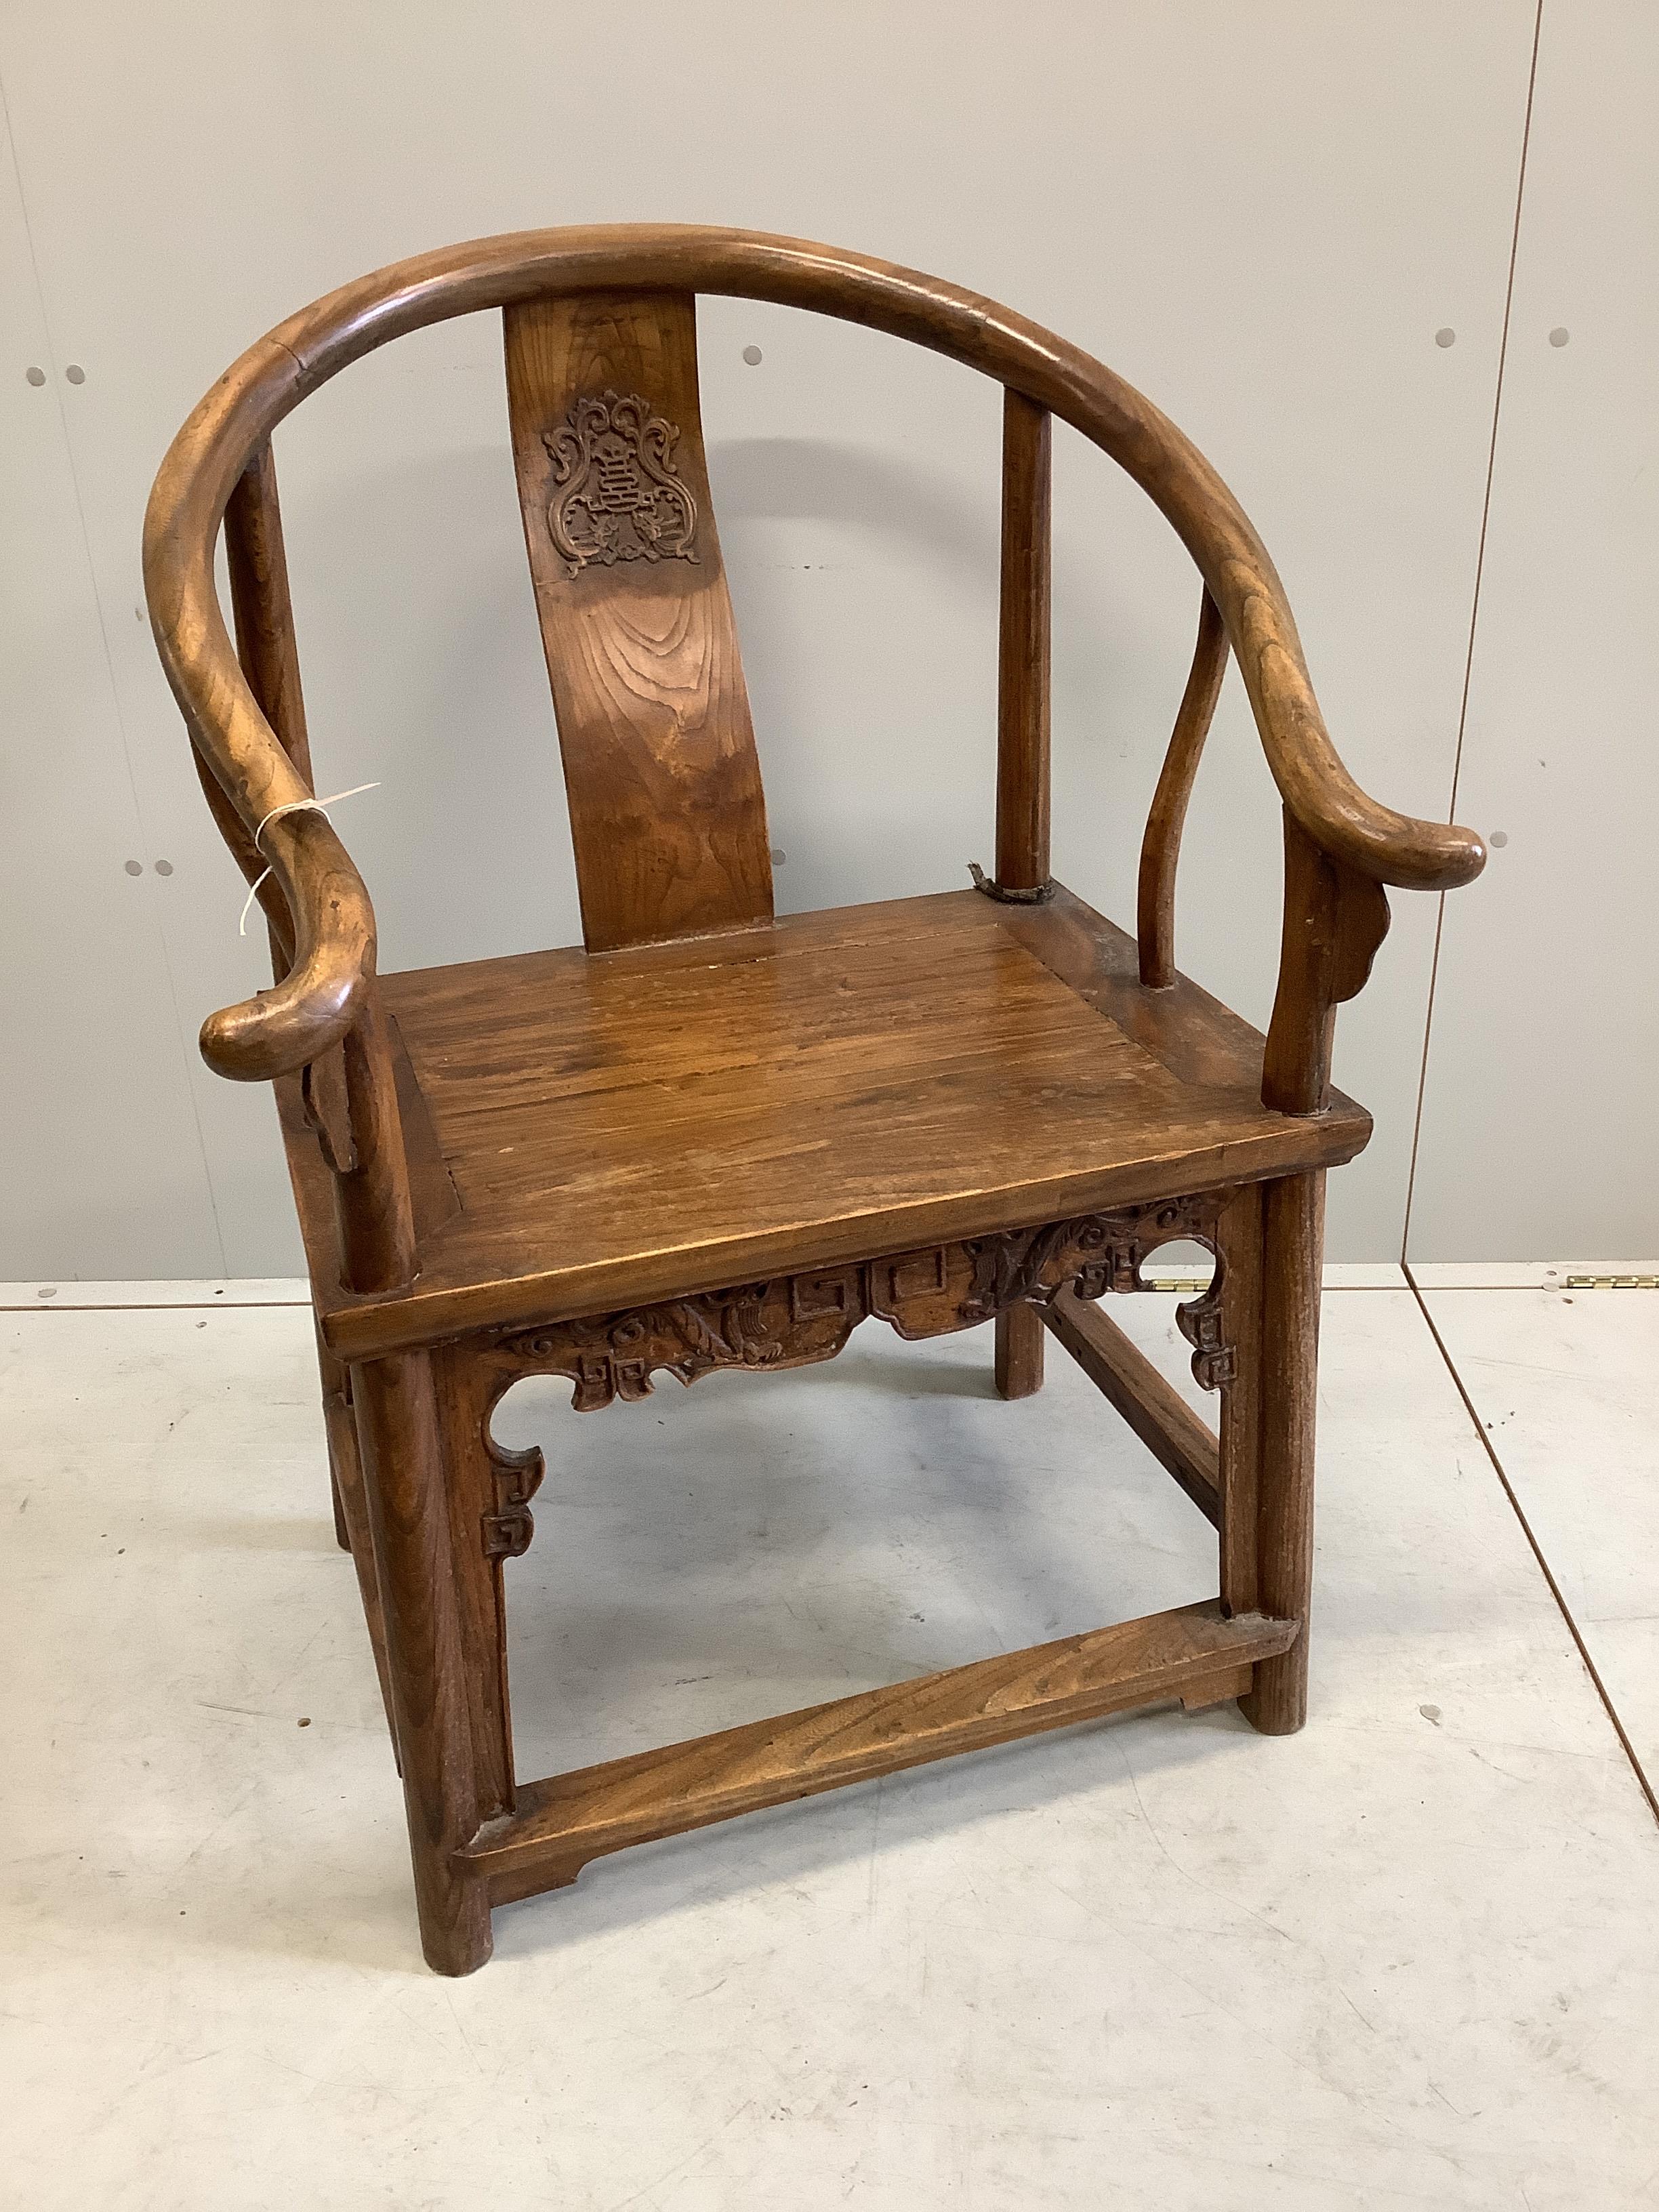 A Chinese elm chair, width 70cm, depth 54cm, height 101cm